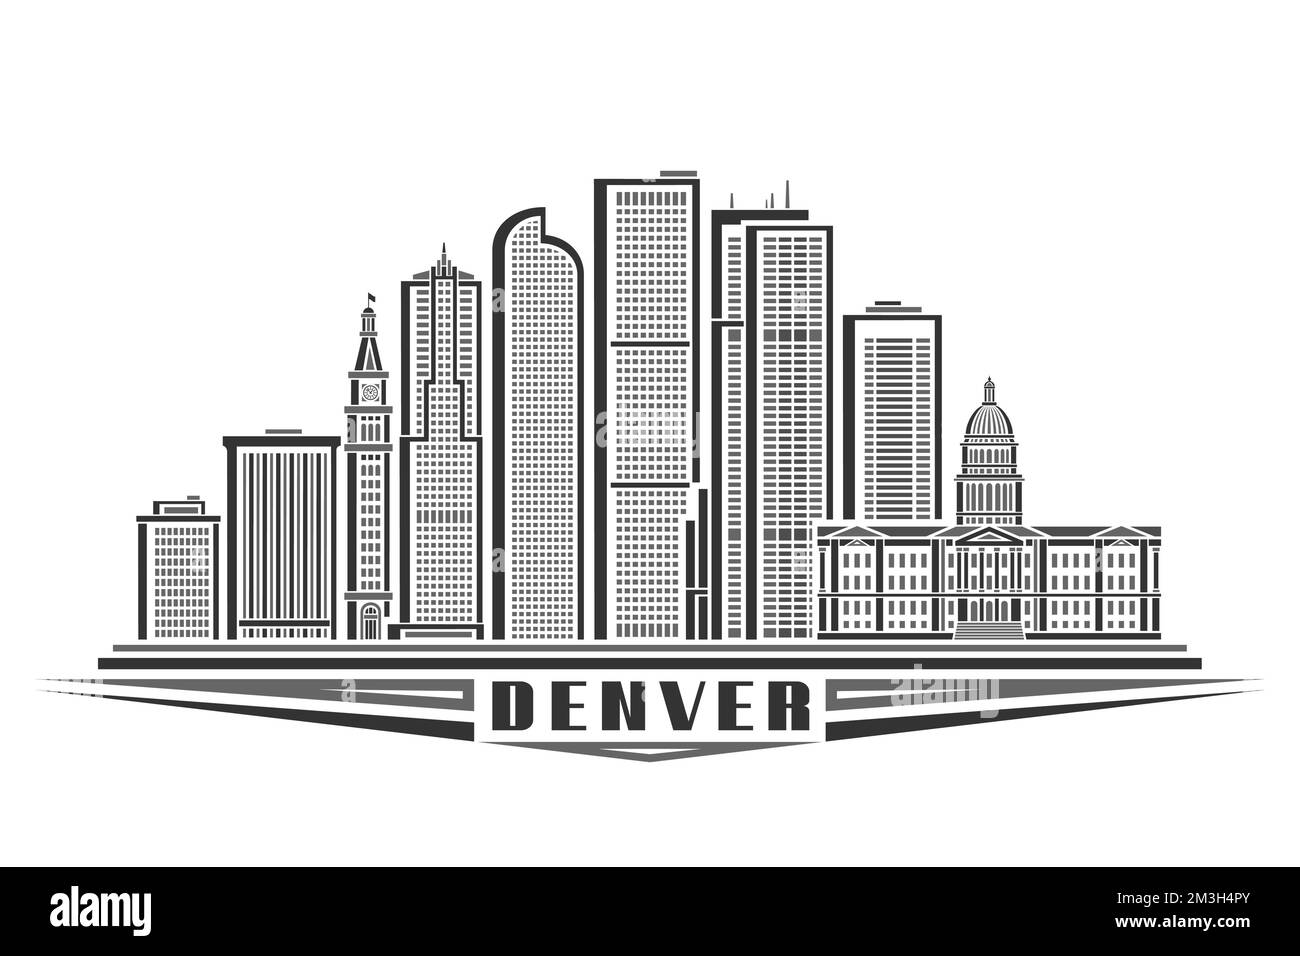 Vector illustration of Denver, monochrome horizontal poster with simple linear design famous denver city scape, urban line art concept with decorative Stock Vector